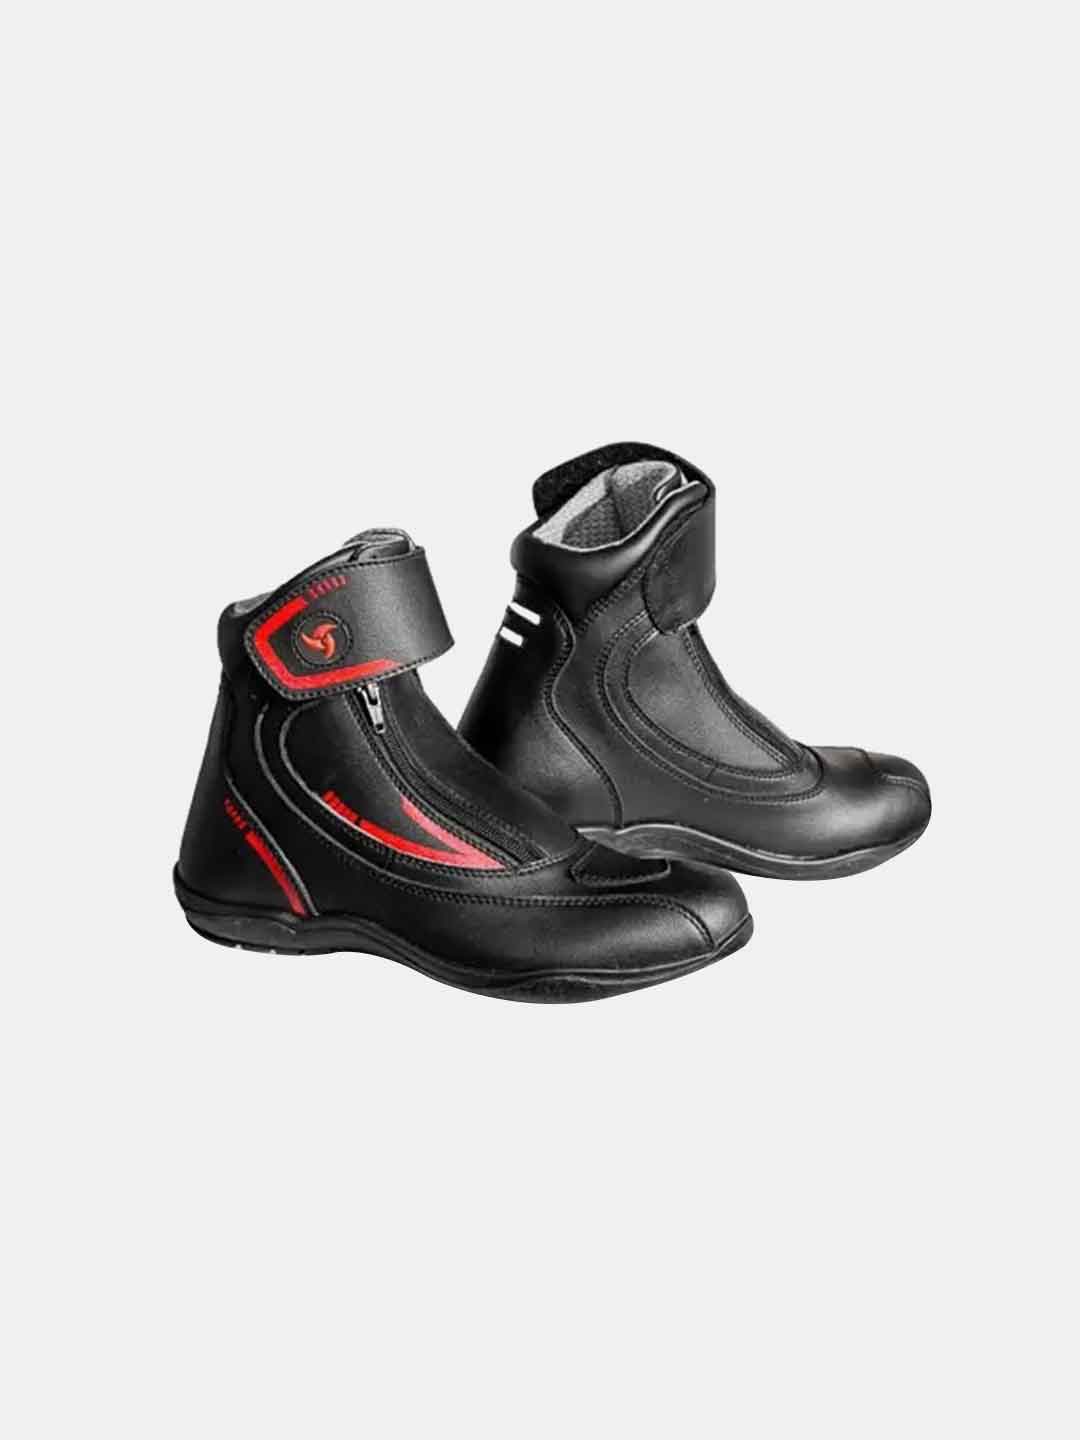 Raida Tourer All Weather Riding Boot-Red